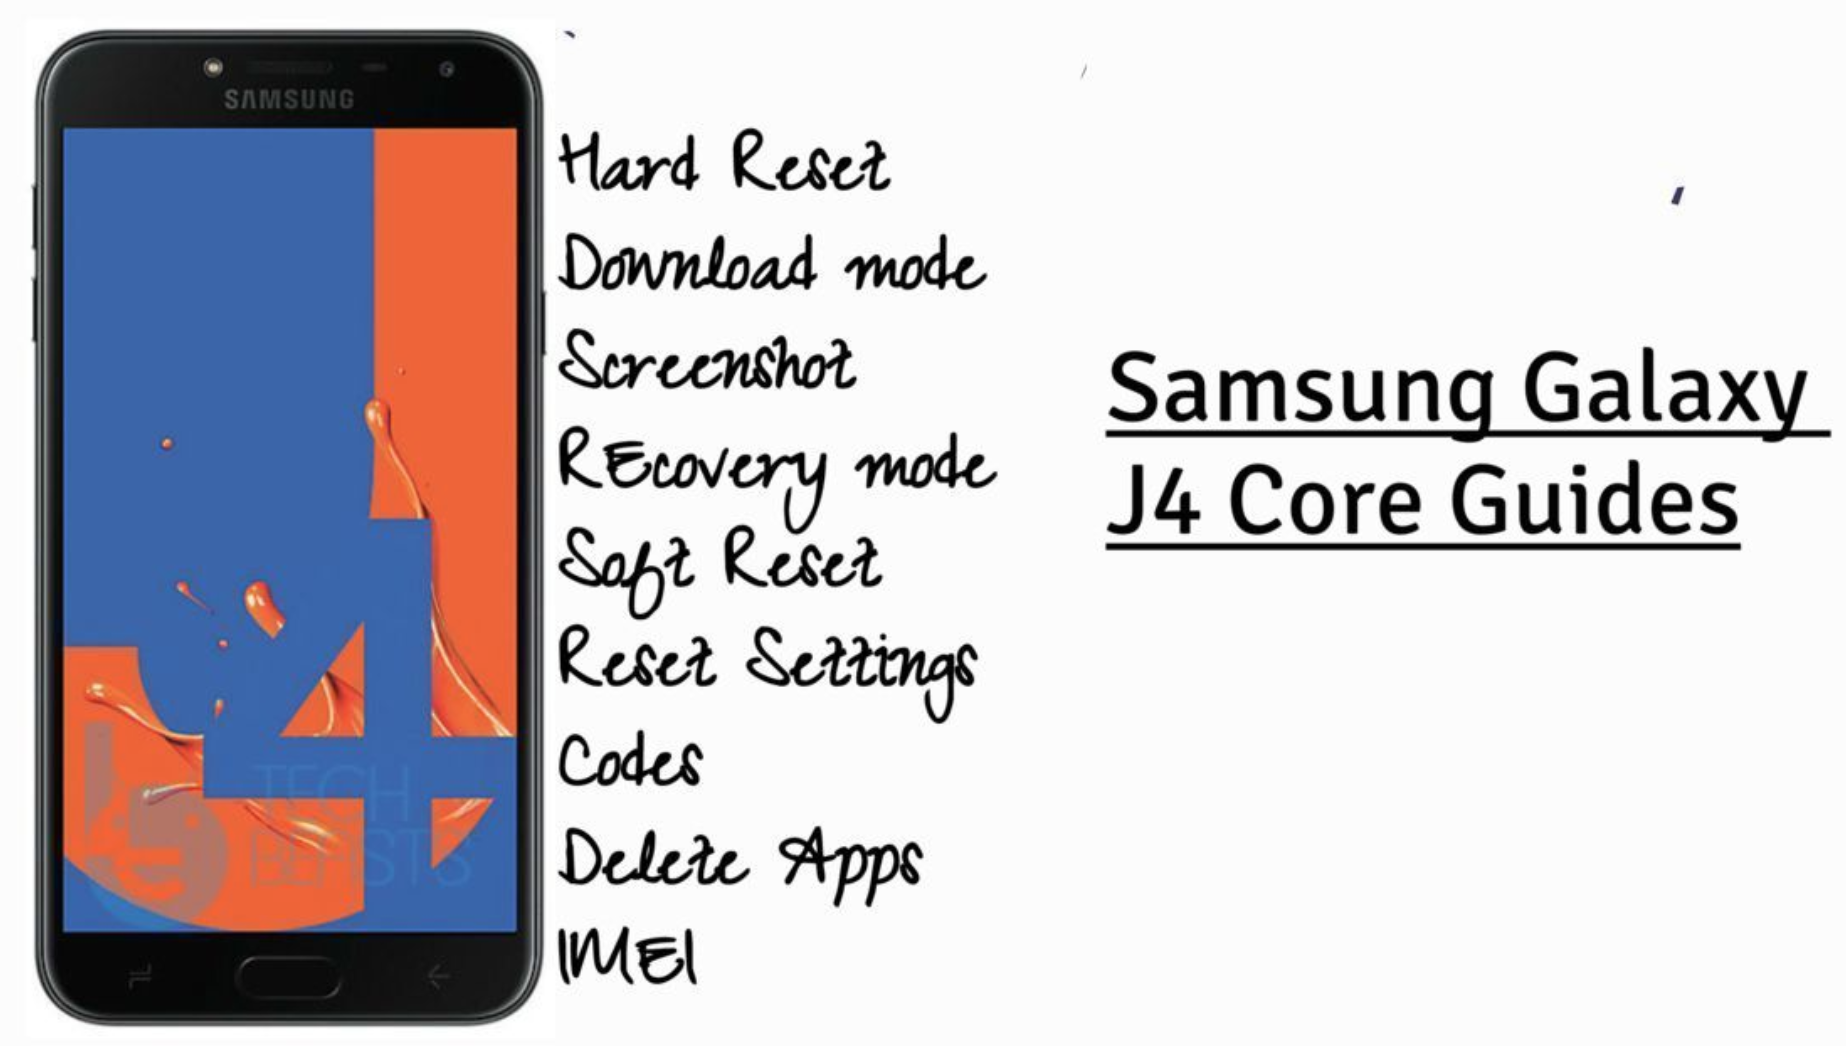 Galaxy J4 Core Guides